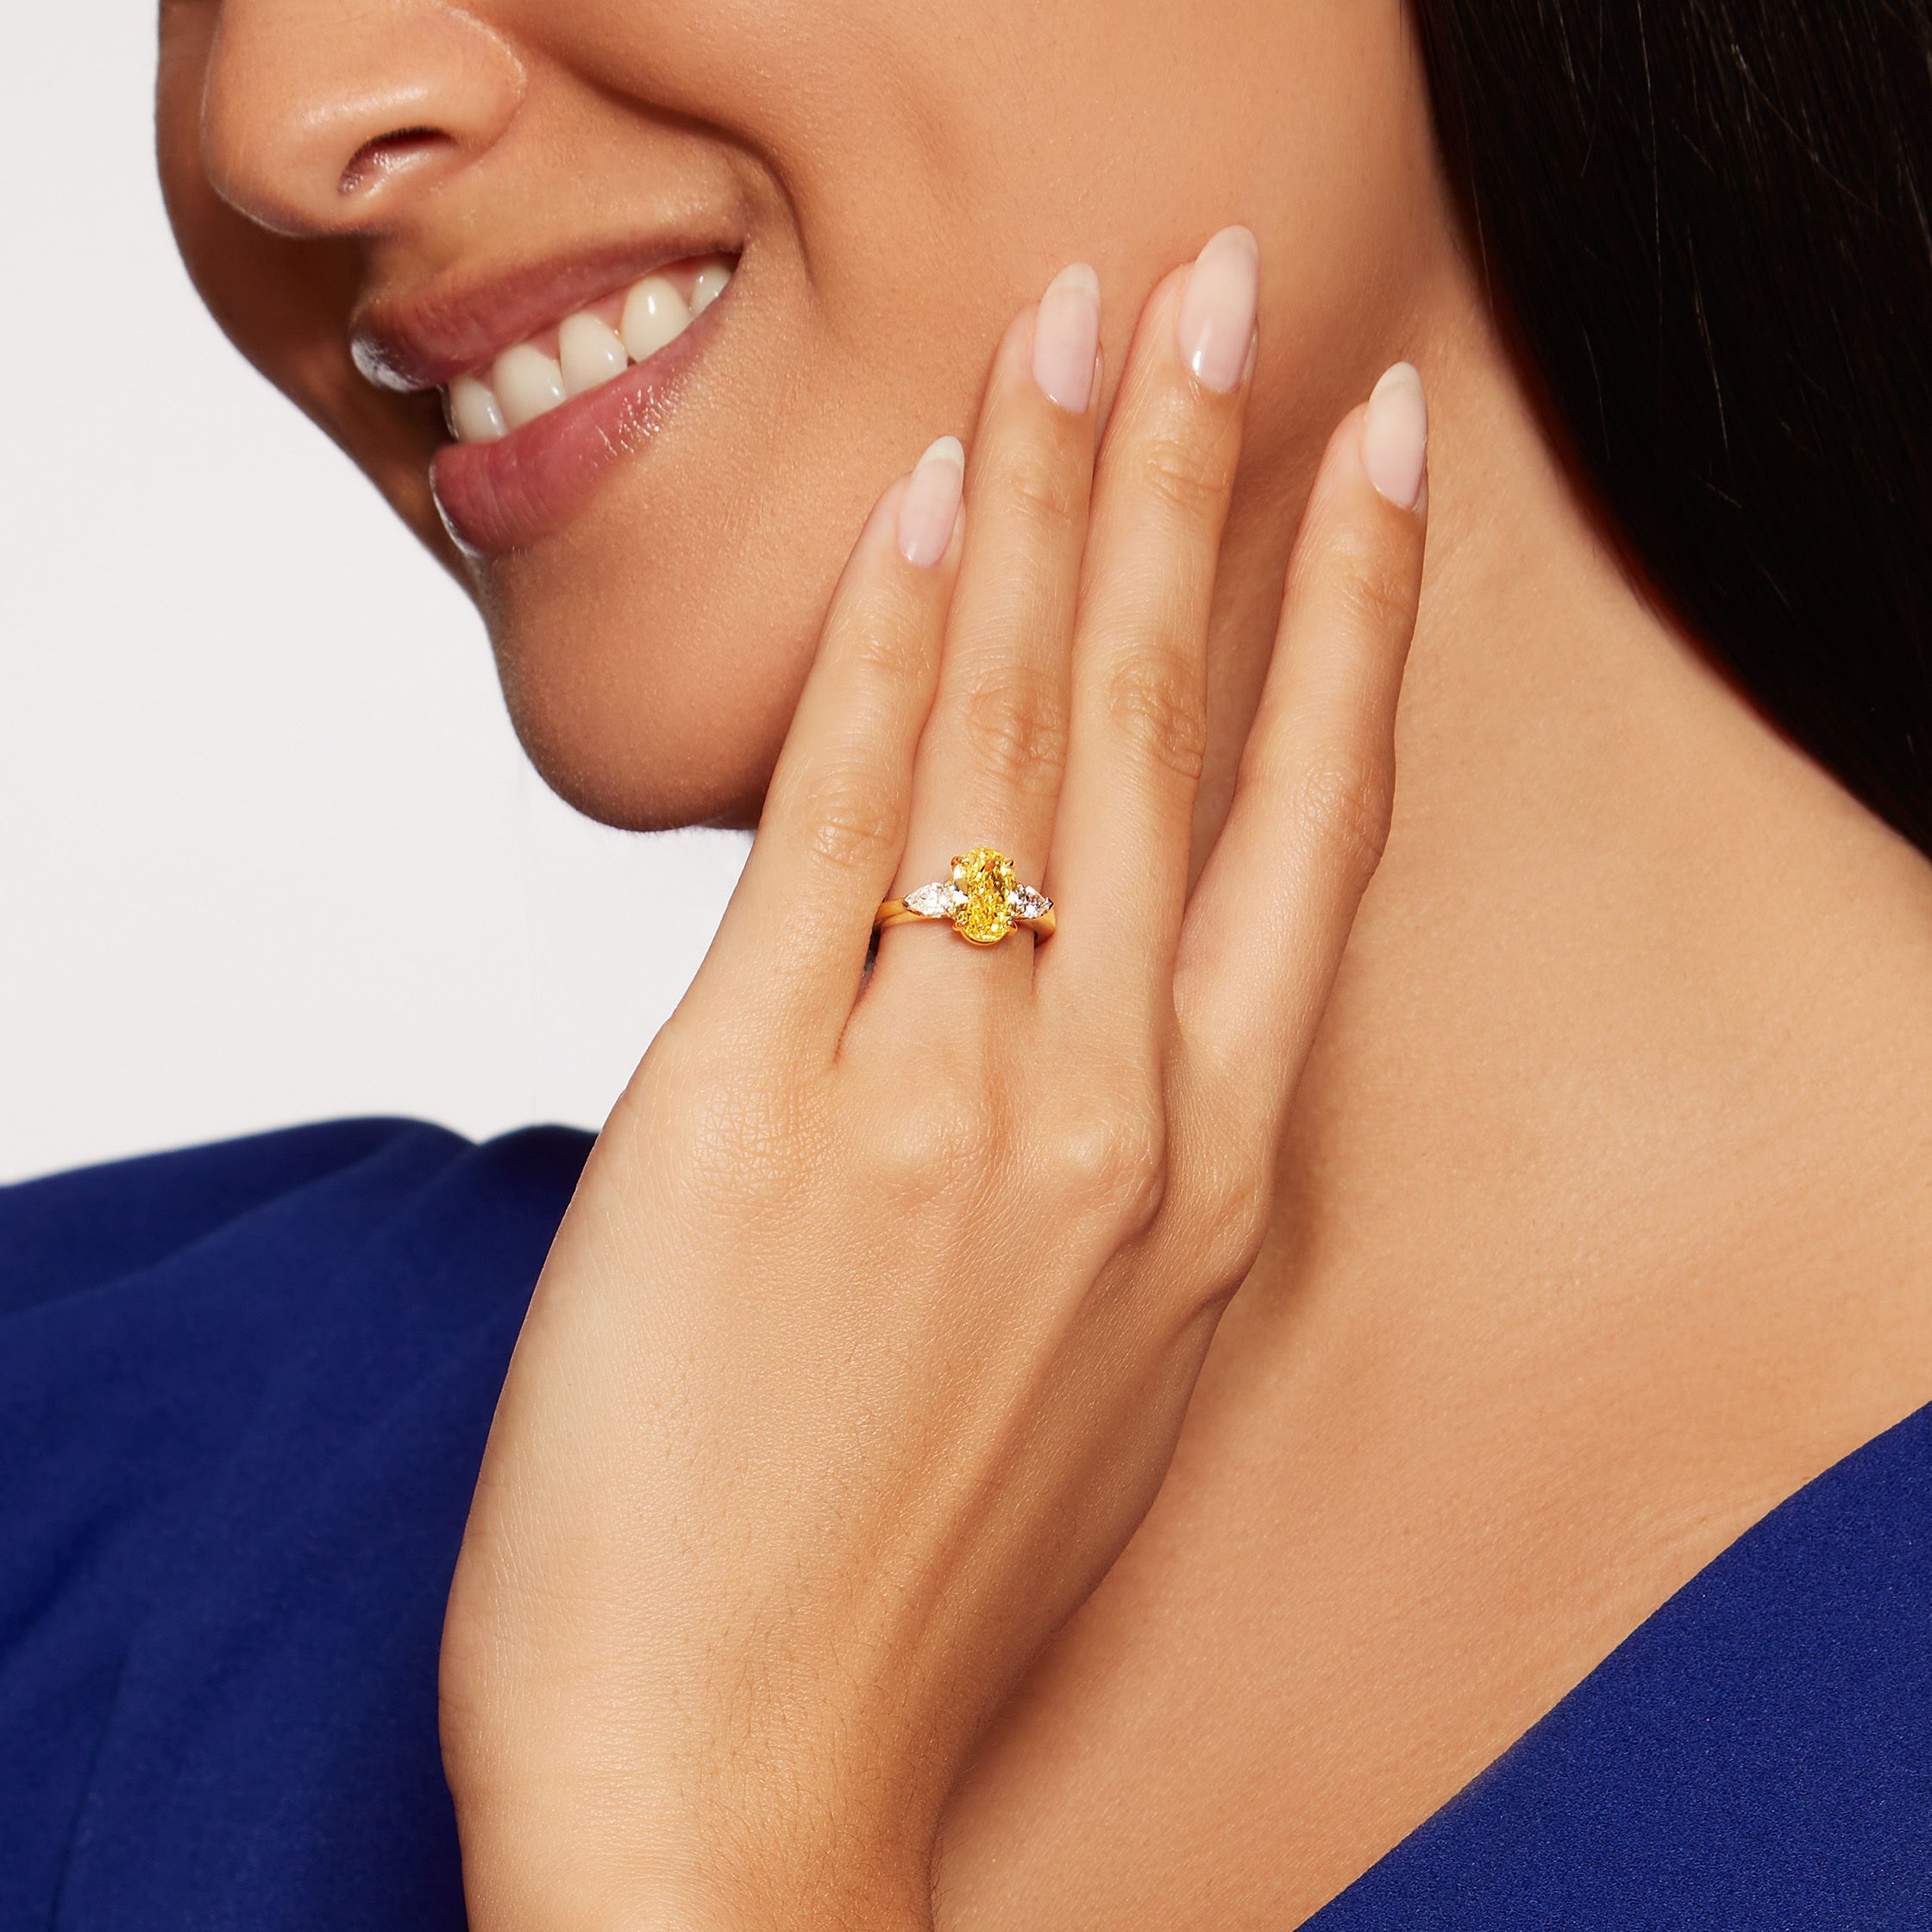 Yellow Diamond Engagement Rings | Diamond Mansion